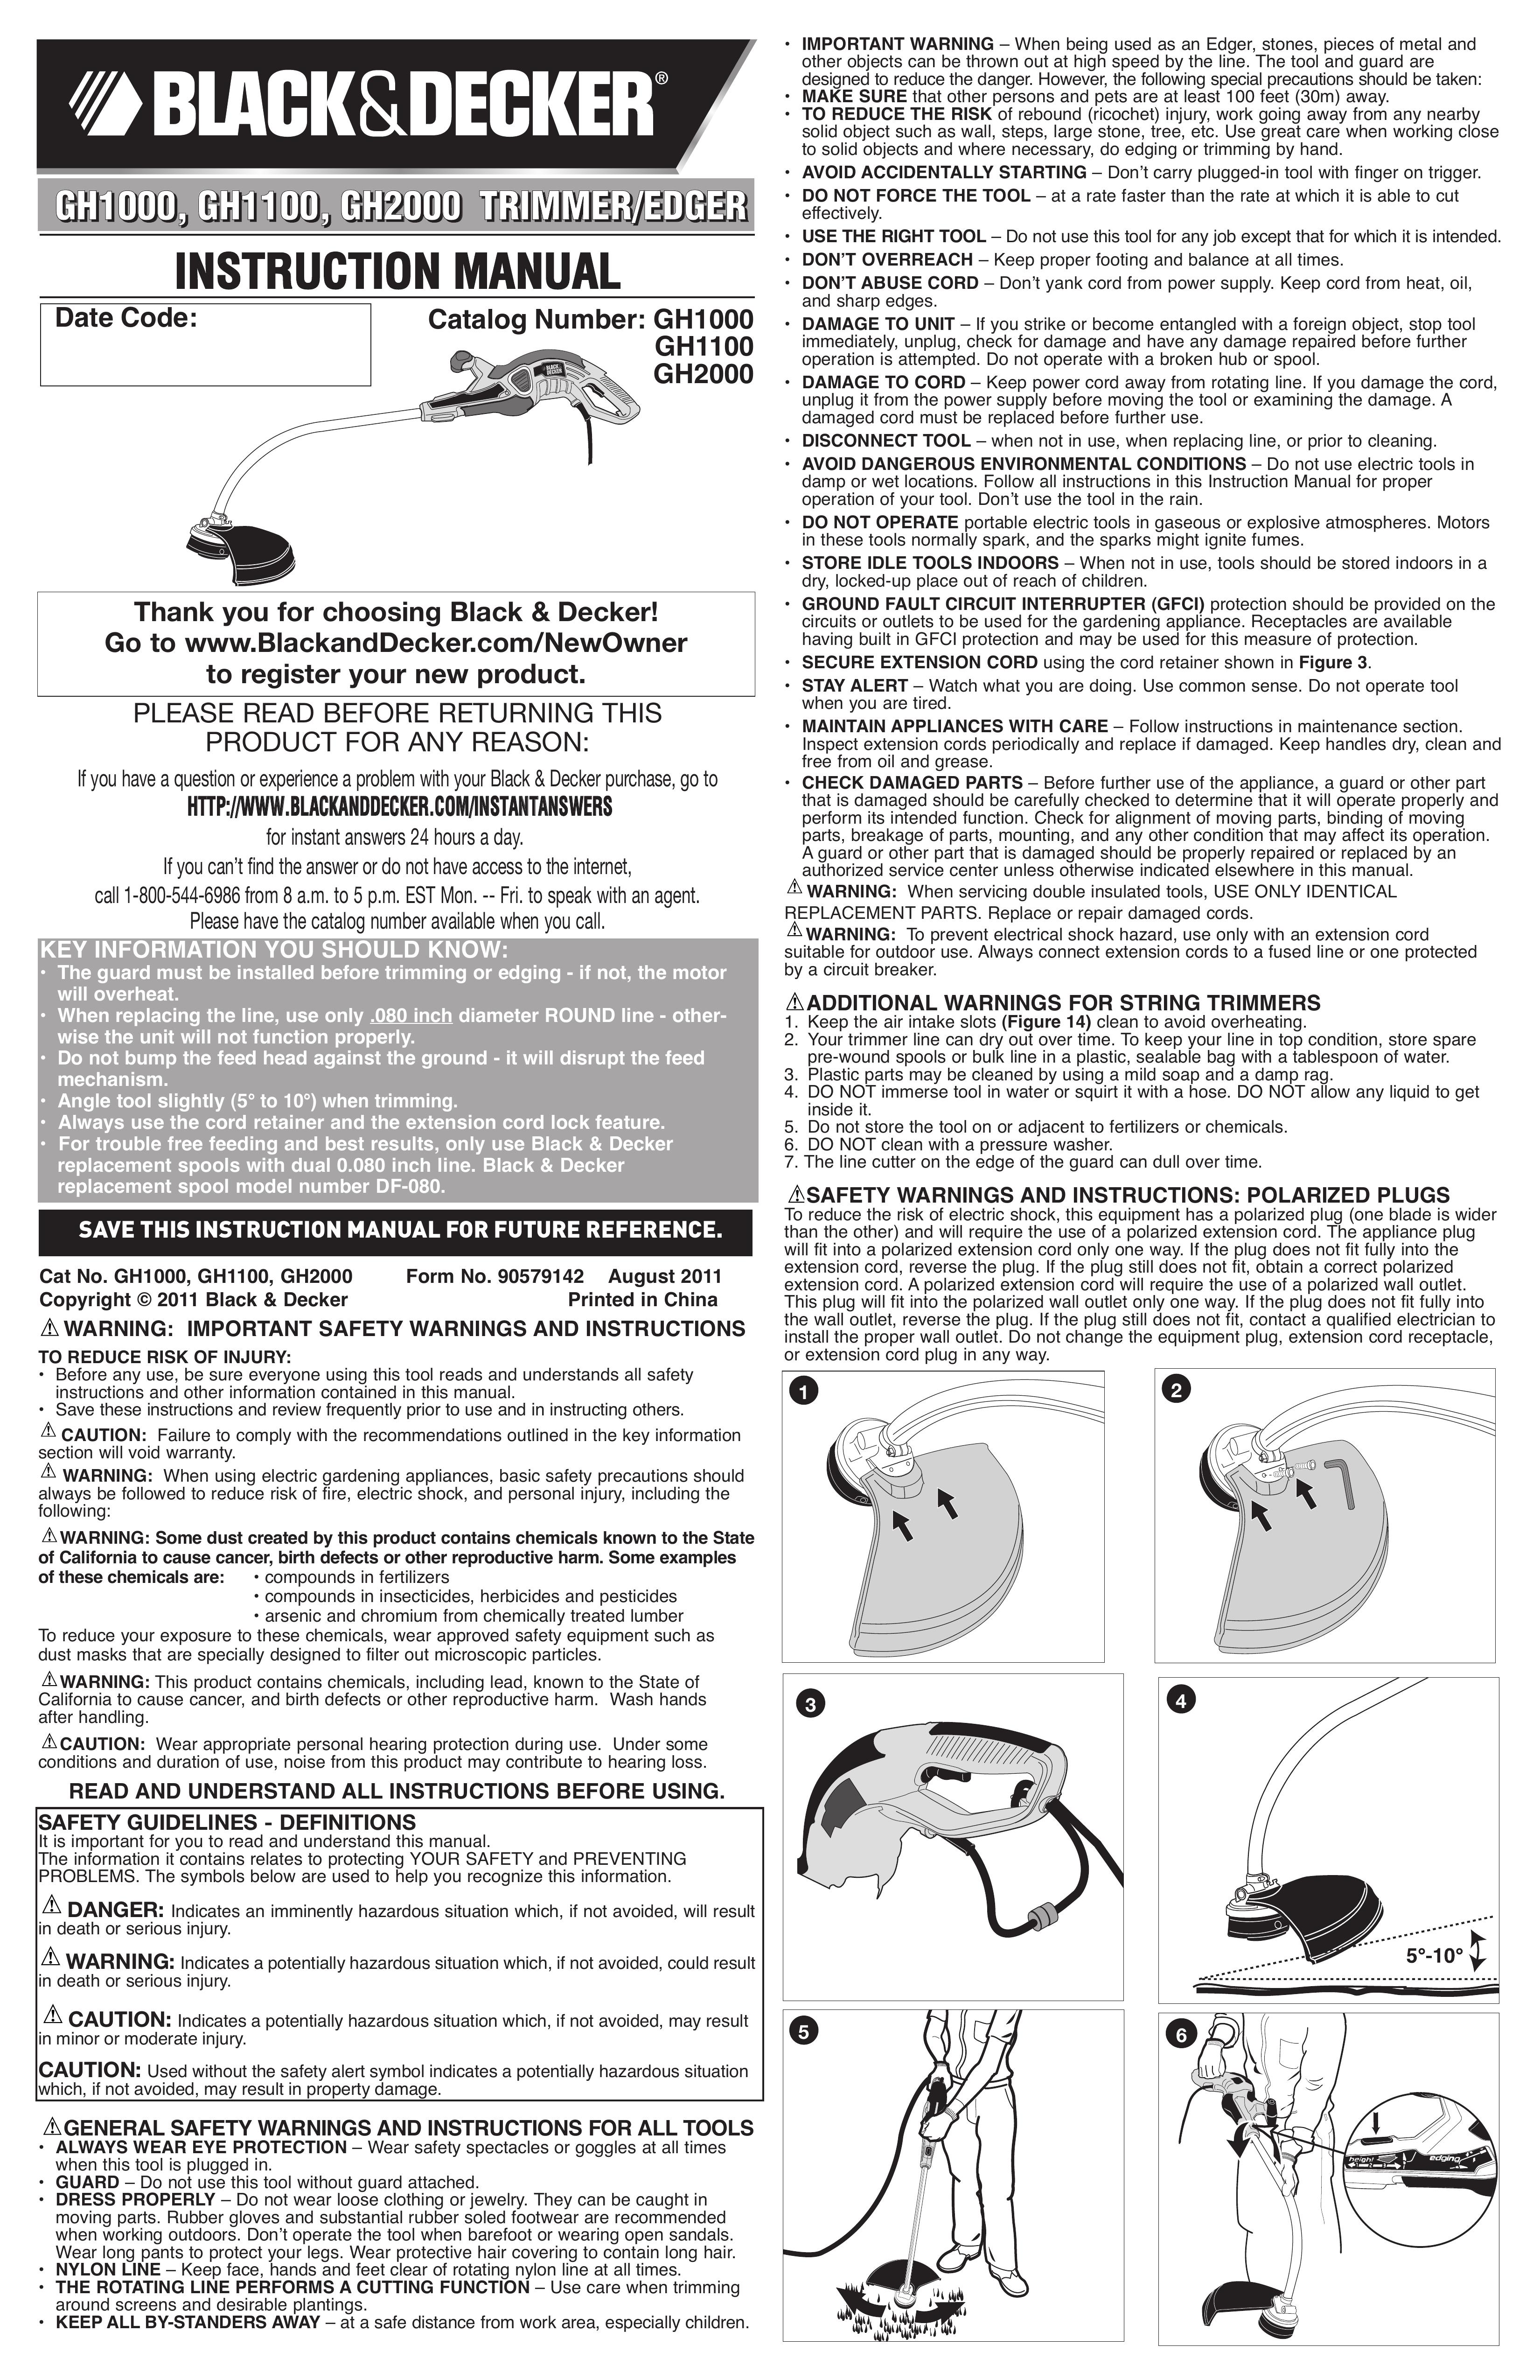 Black & Decker GH1100 Edger User Manual